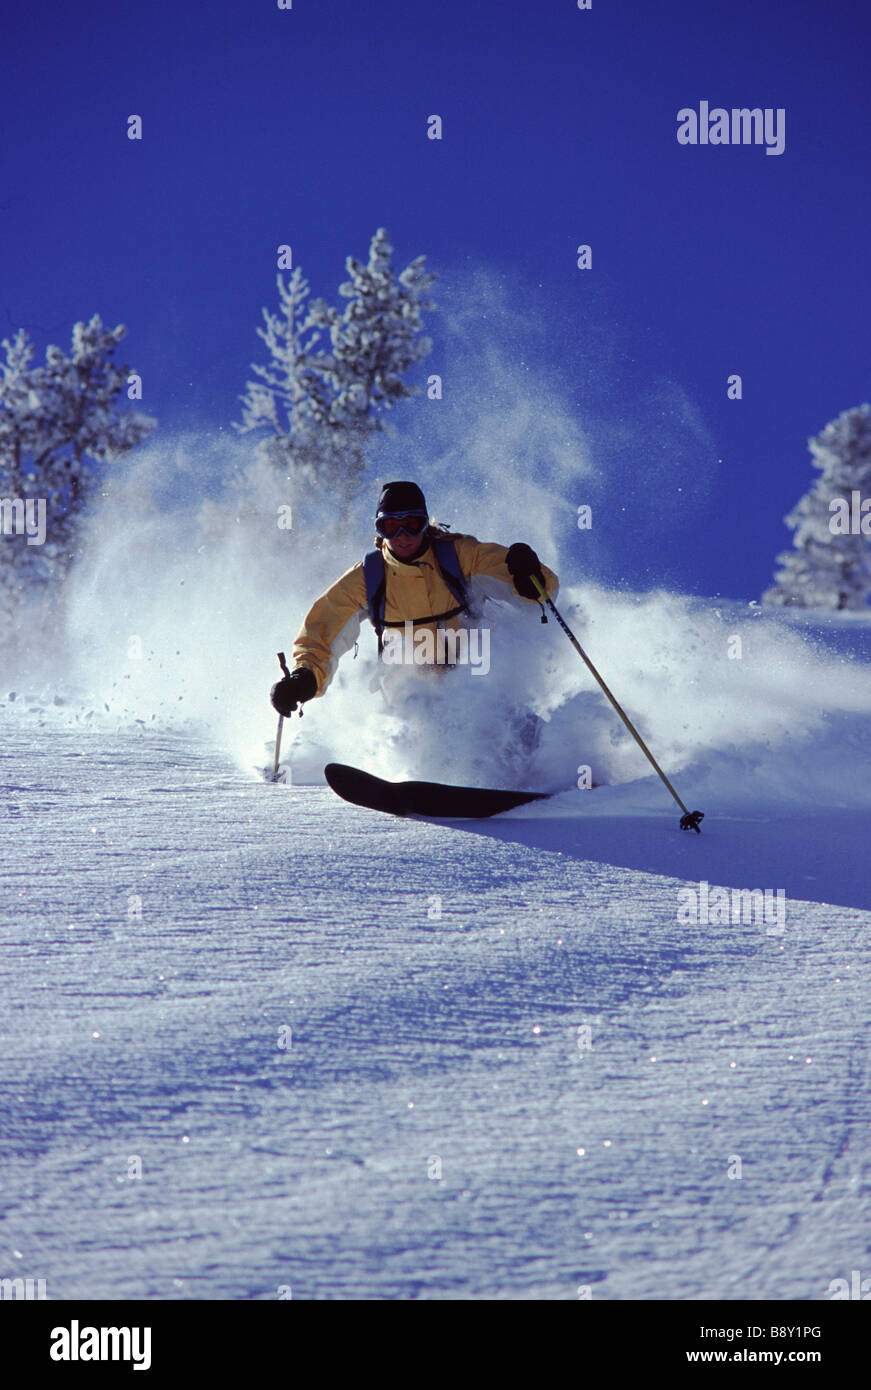 Woman skiing, Sugar Bowl Ski Resort, California, USA Stock Photo